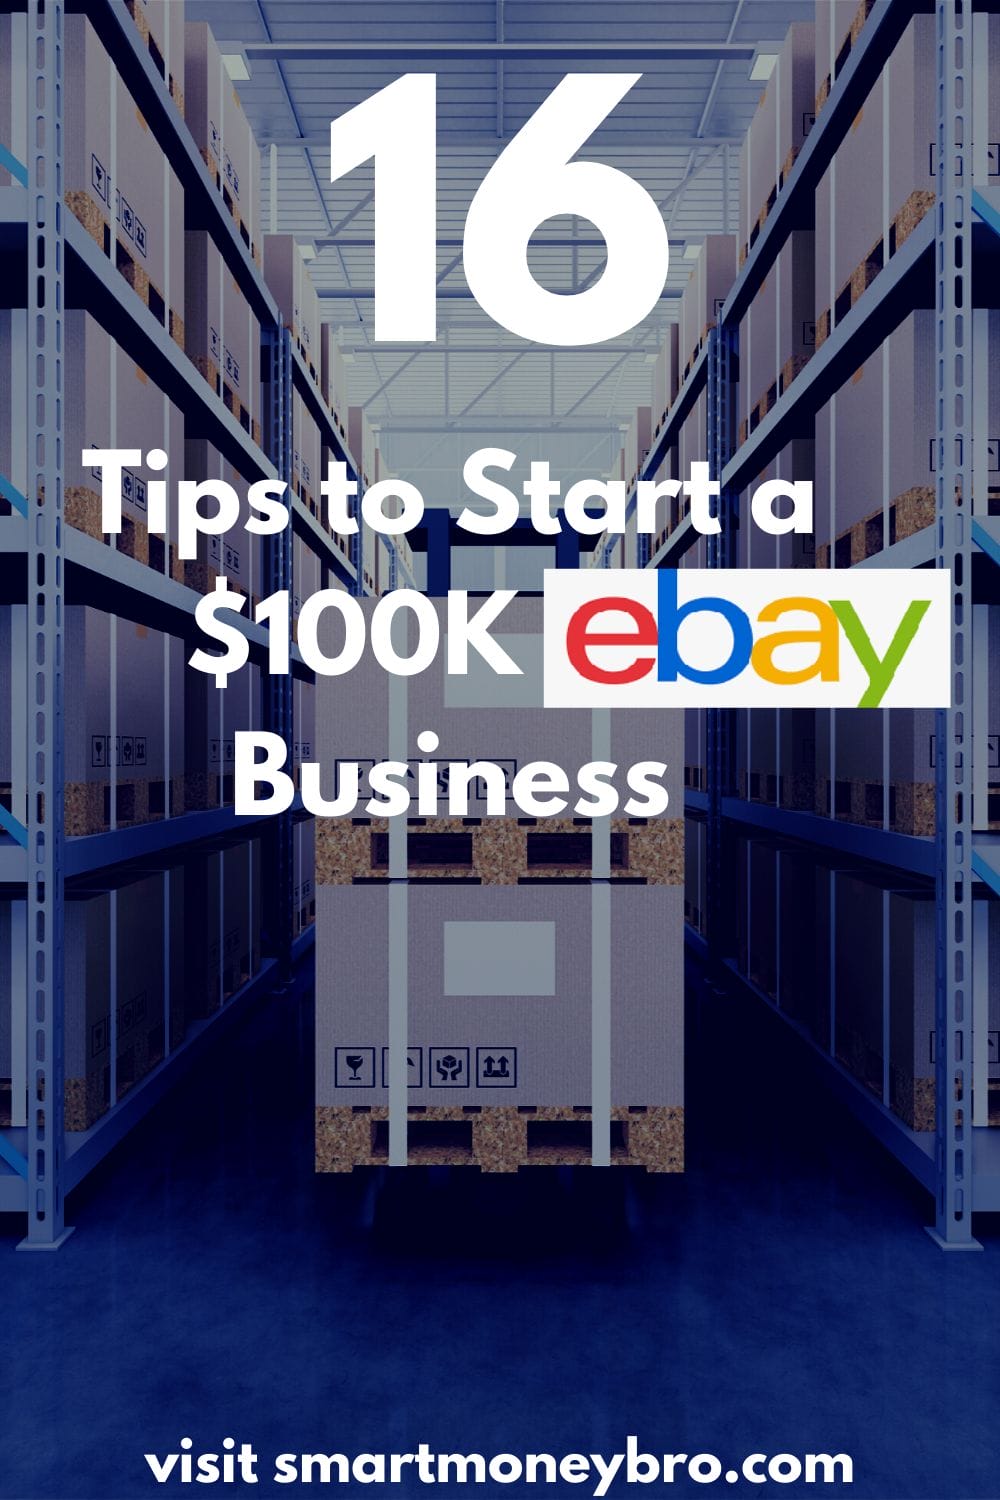 Tips to start a $100K ebay business, smart money bro